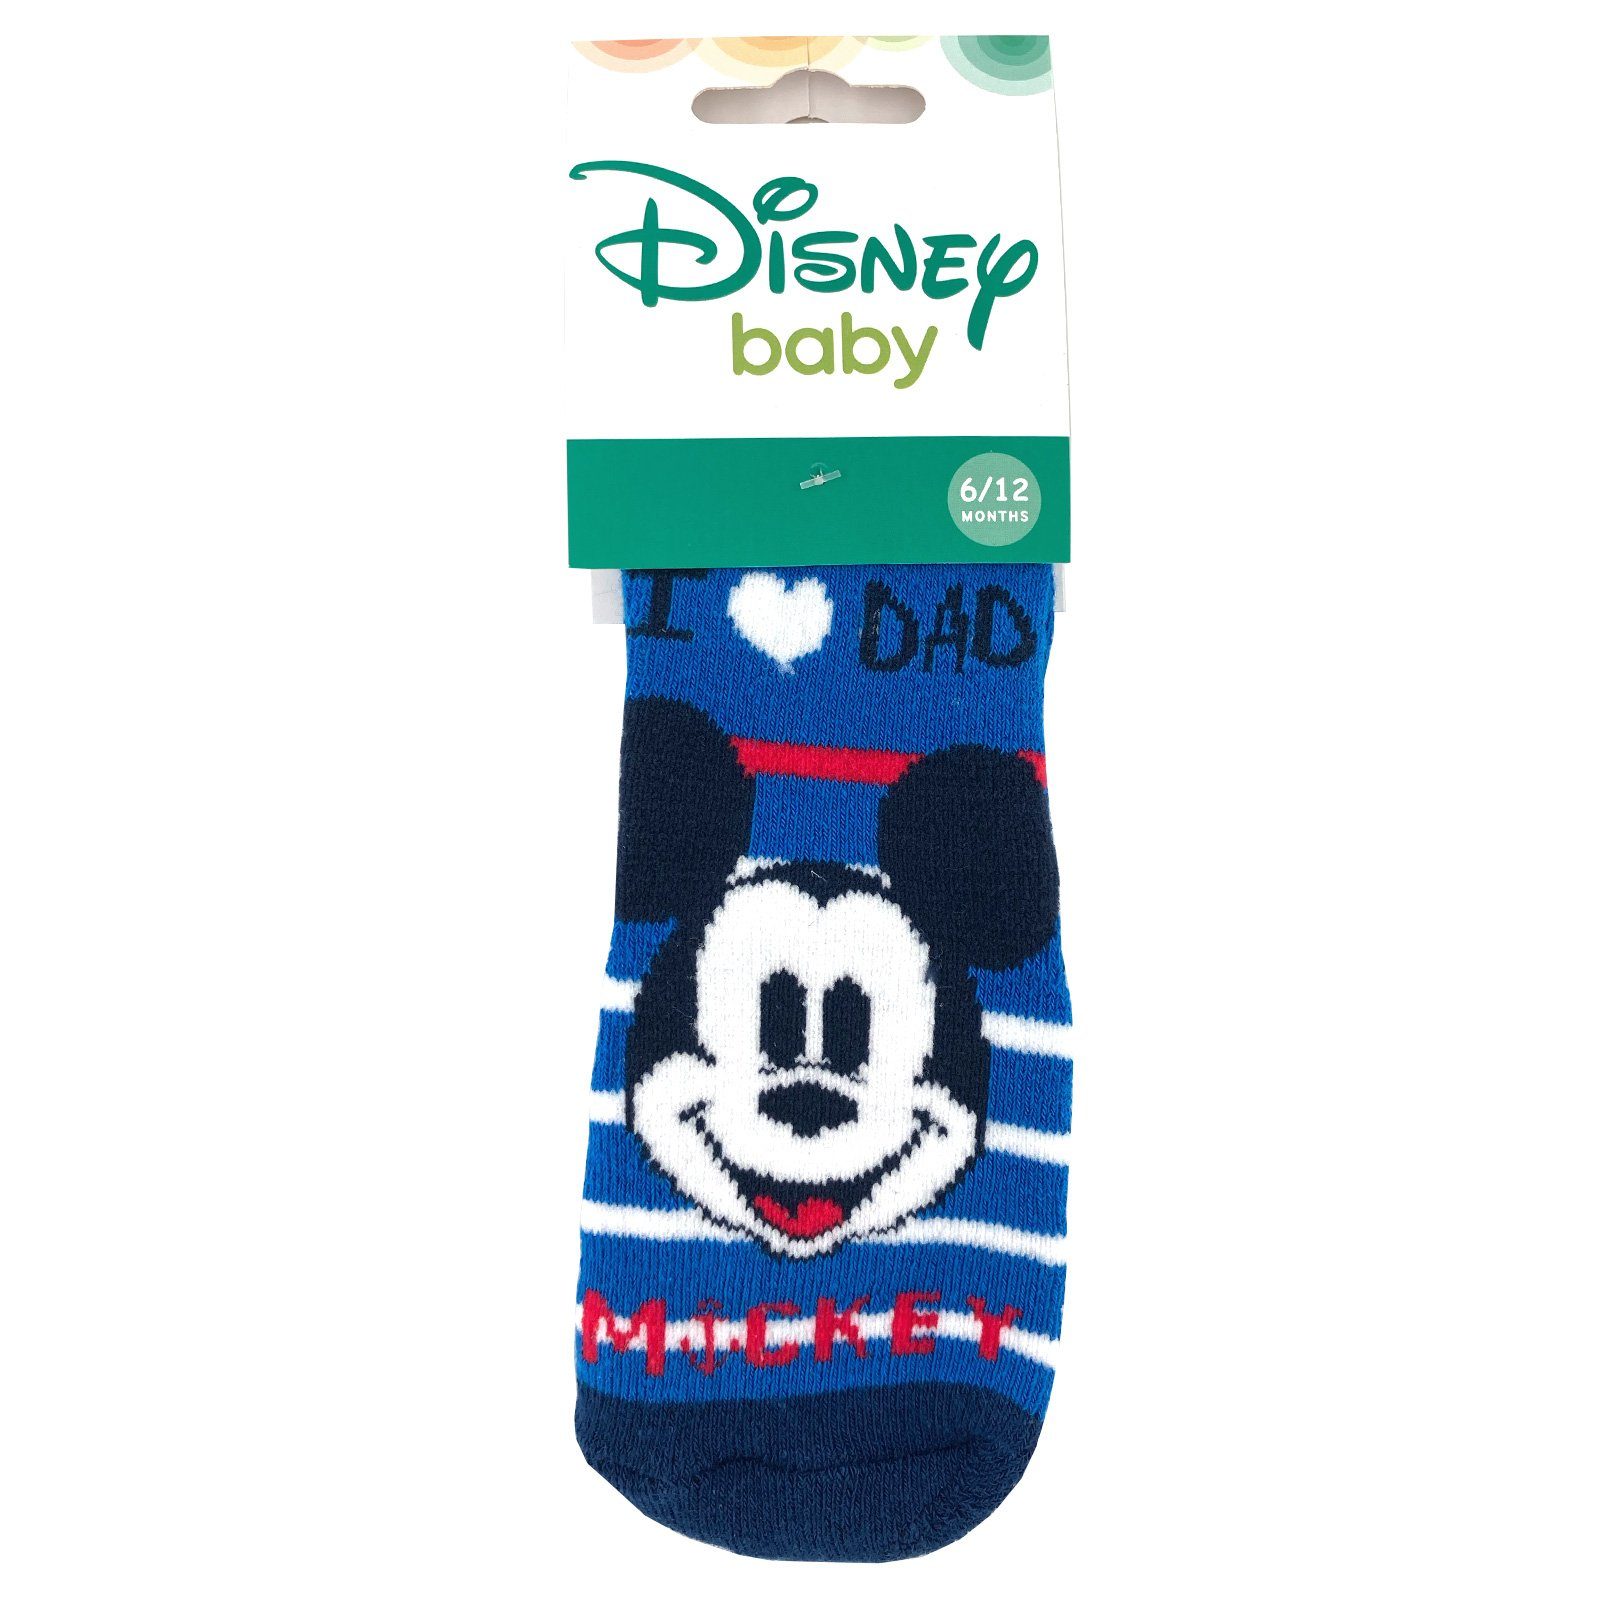 Disney Mickey Mouse Maus Baby Socken Strümpfe Gr 0-6 Monate 6-12 Monate Junge 